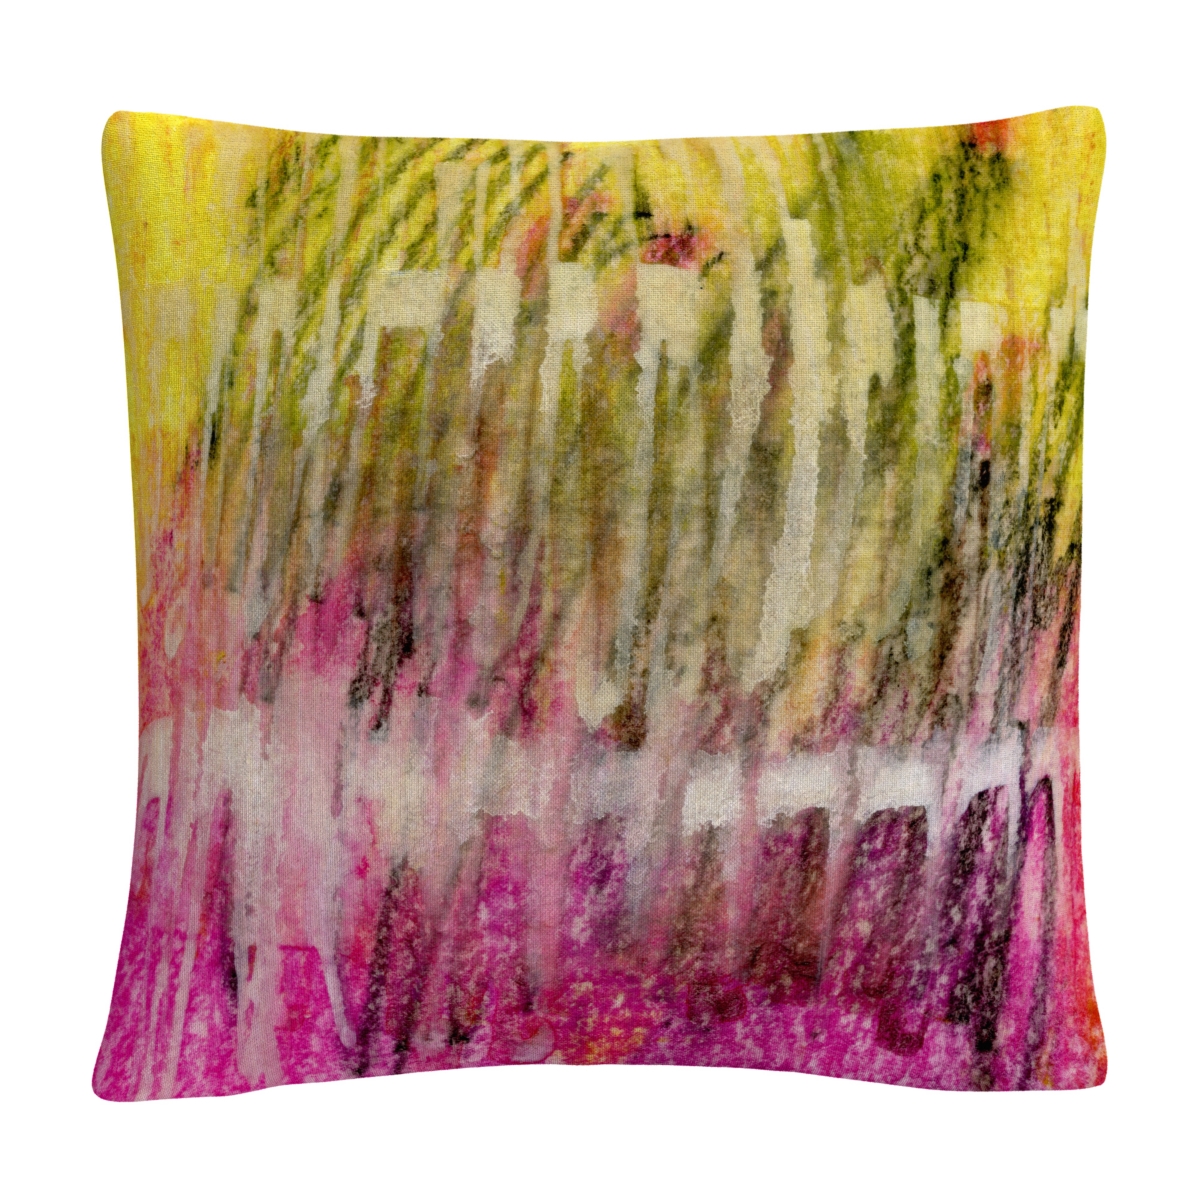 Anthony Sikich Glazed Kenetics Colorful Shapes Line Composition Decorative Pillow, 16 x 16